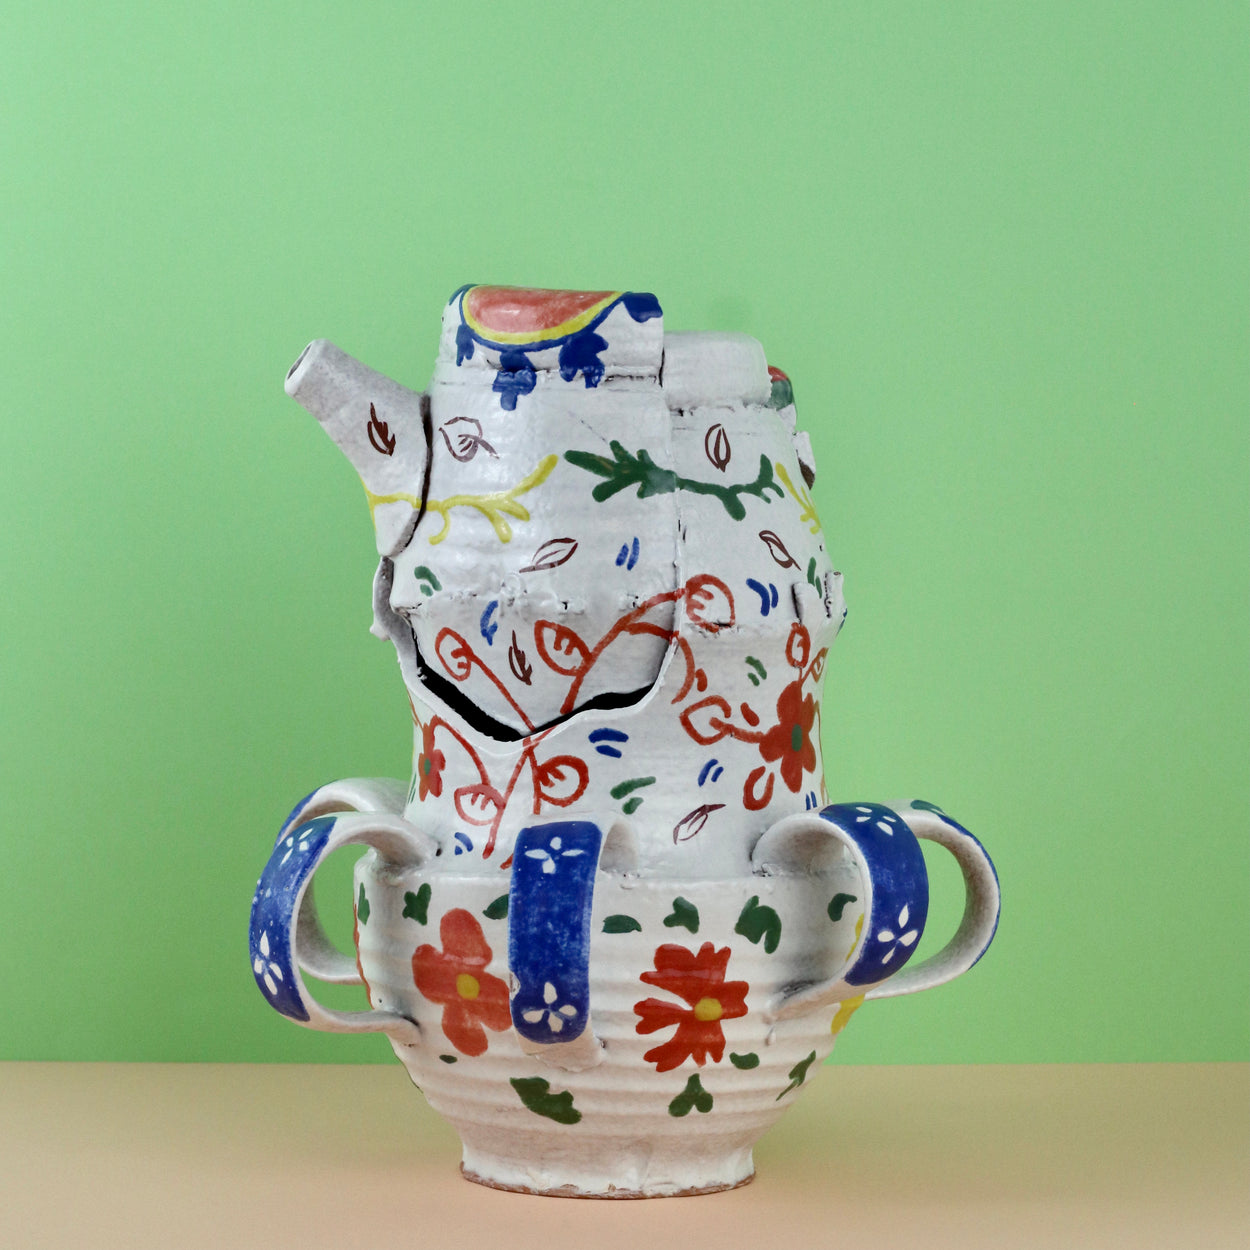 Handmade Ceramic Pentref Jug by Elin Hughes against a green and peach background.